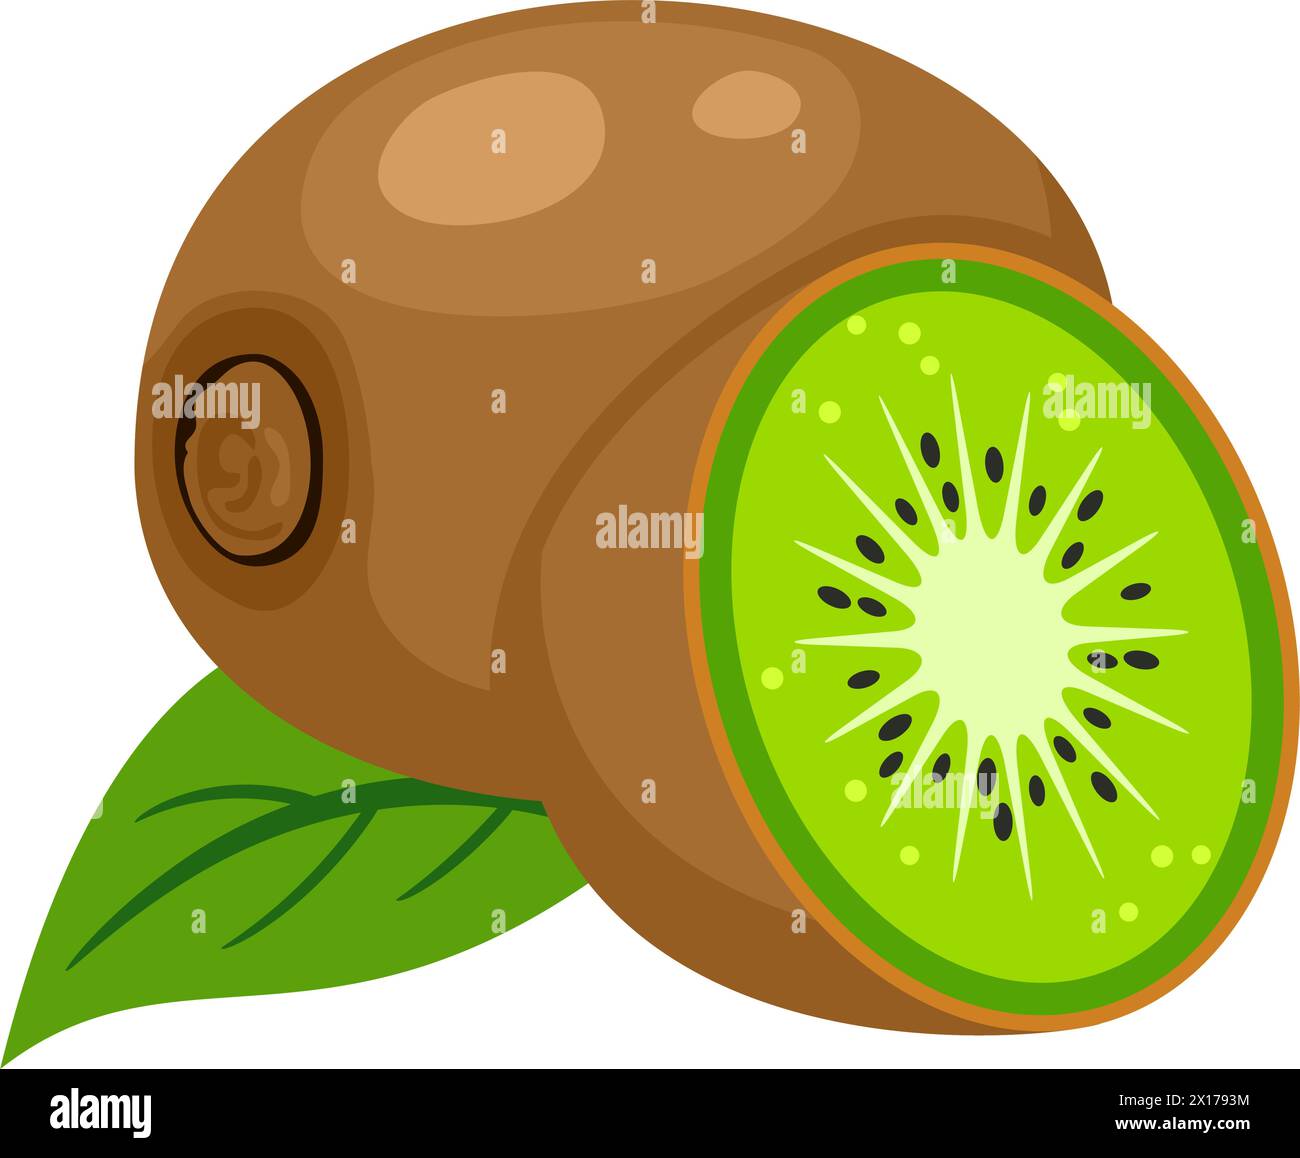 vector illustration of whole kiwi fruit, leaf and a kiwi fruit cut isolated on white background. icon of kiwifruit and slice with seeds Stock Vector